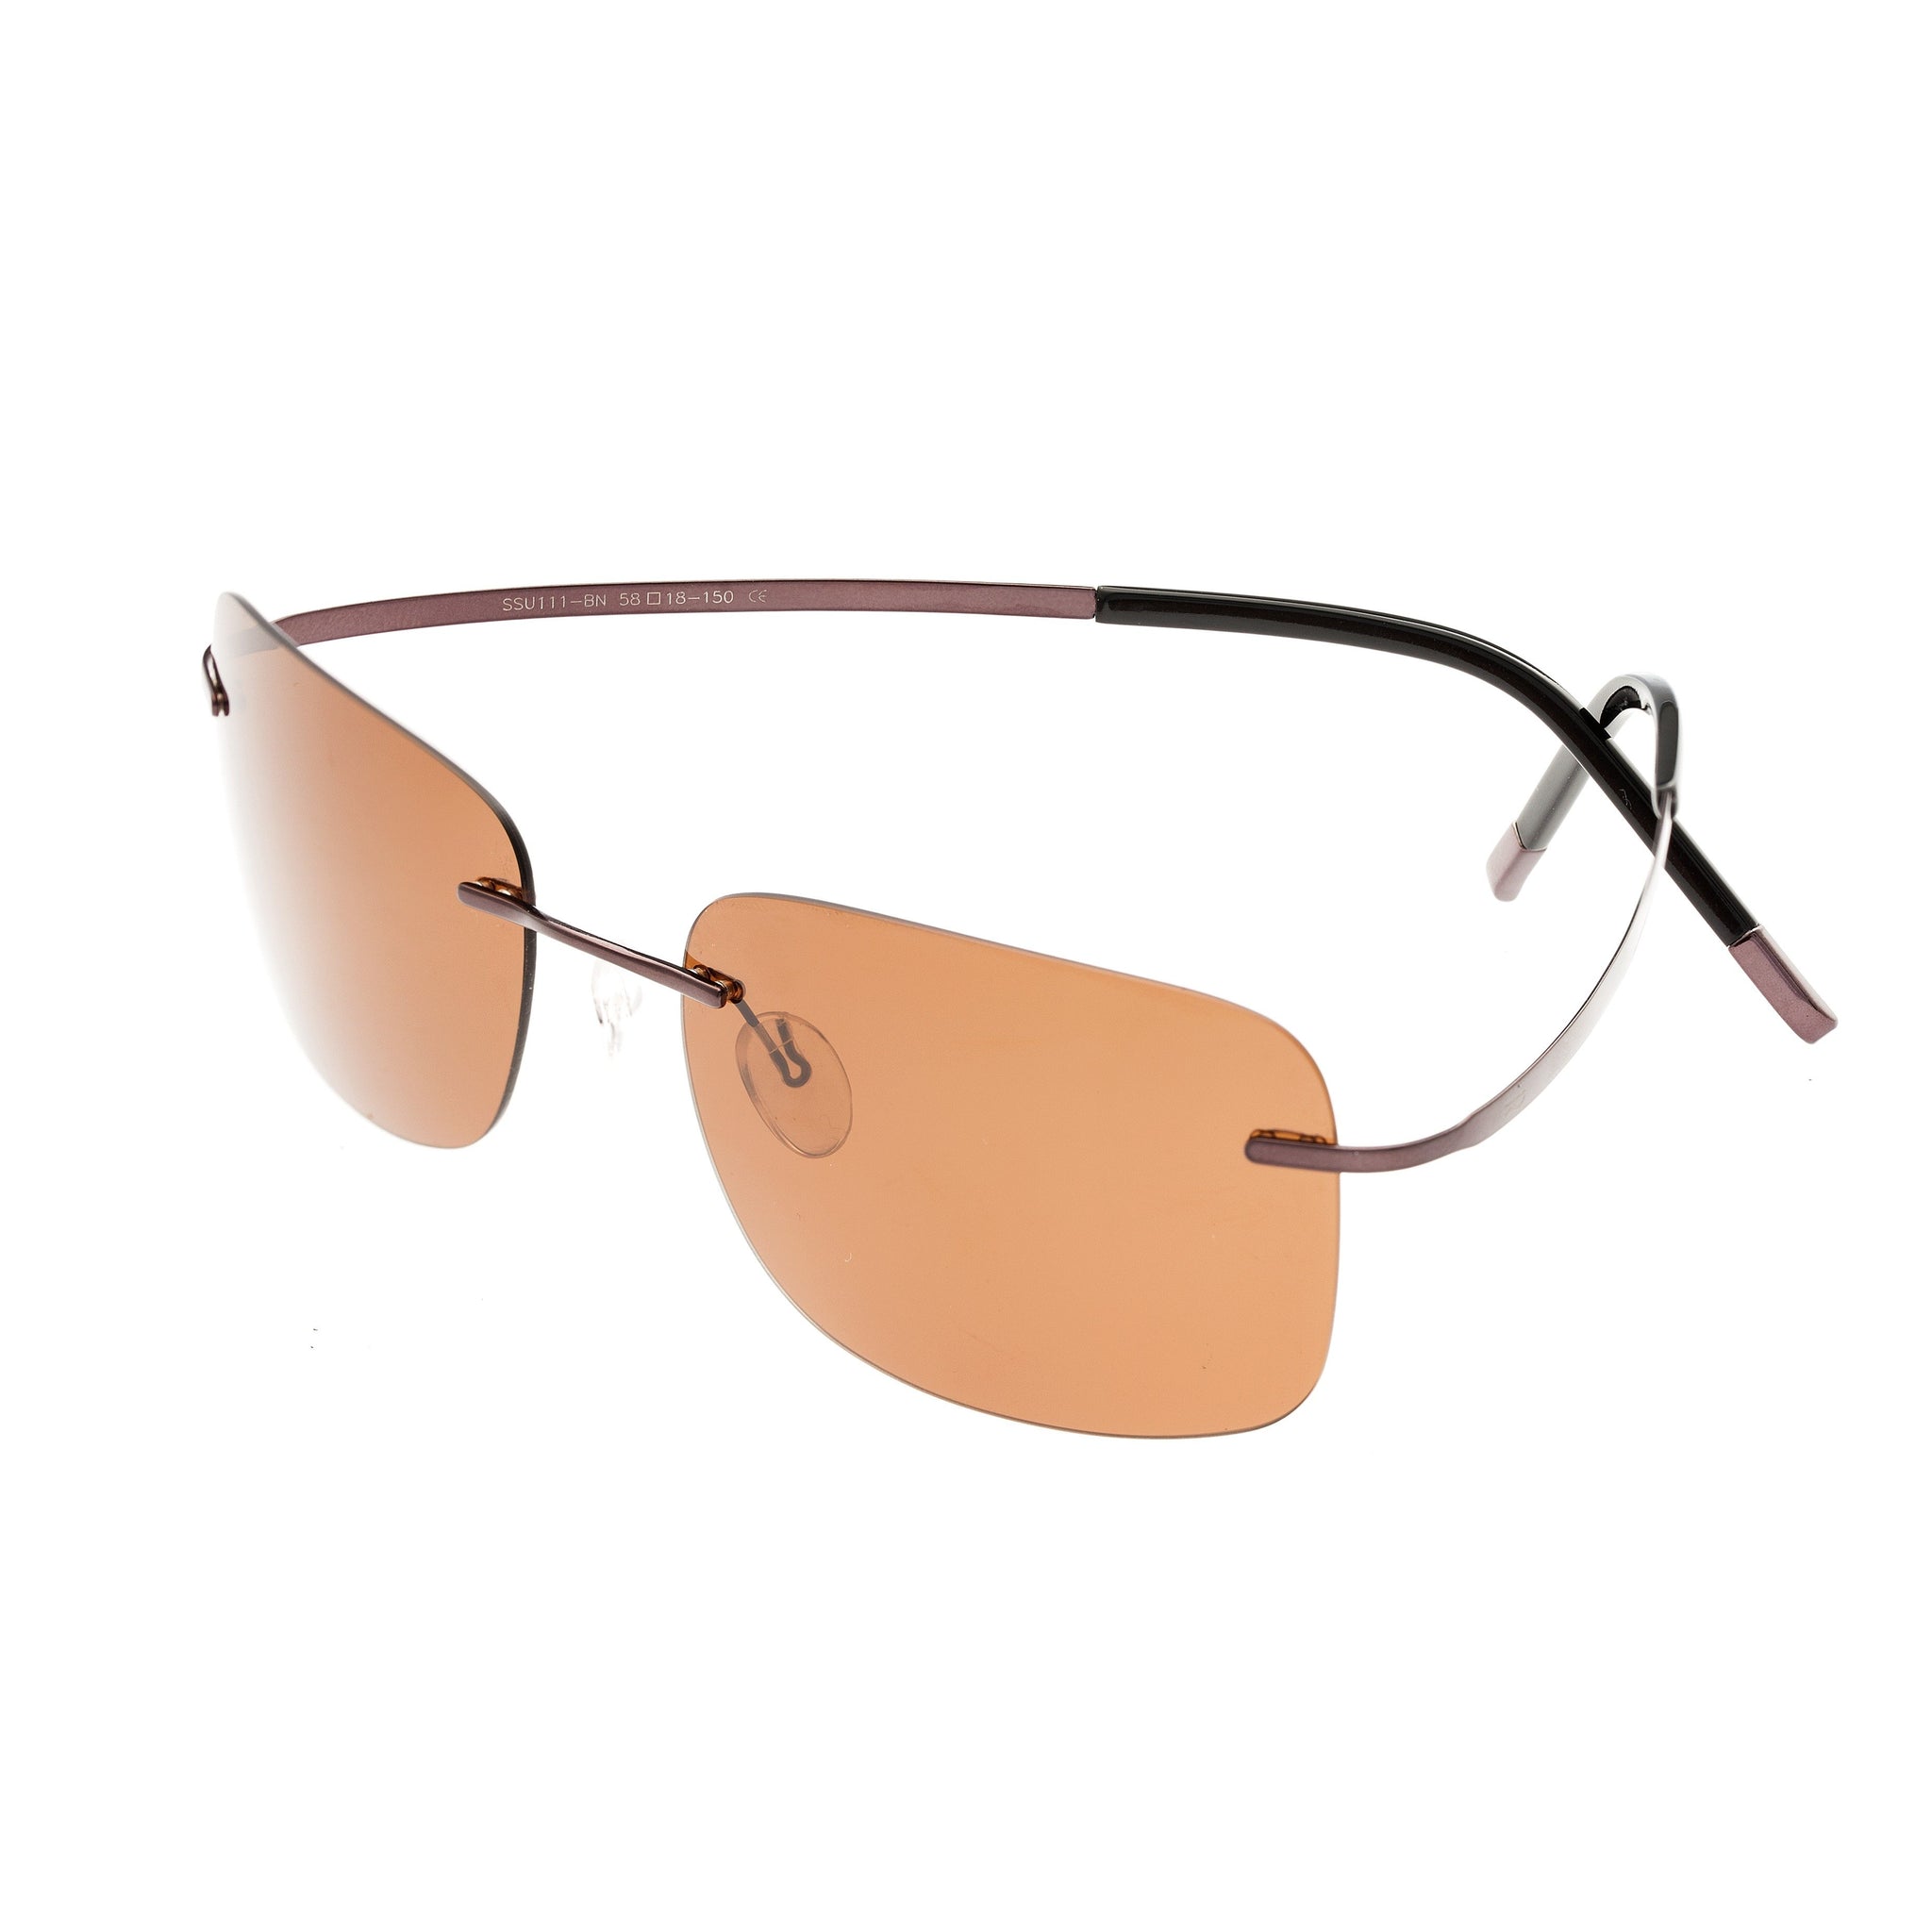 Simplify Ashton Polarized Sunglasses - Brown/Brown - SSU111-BN